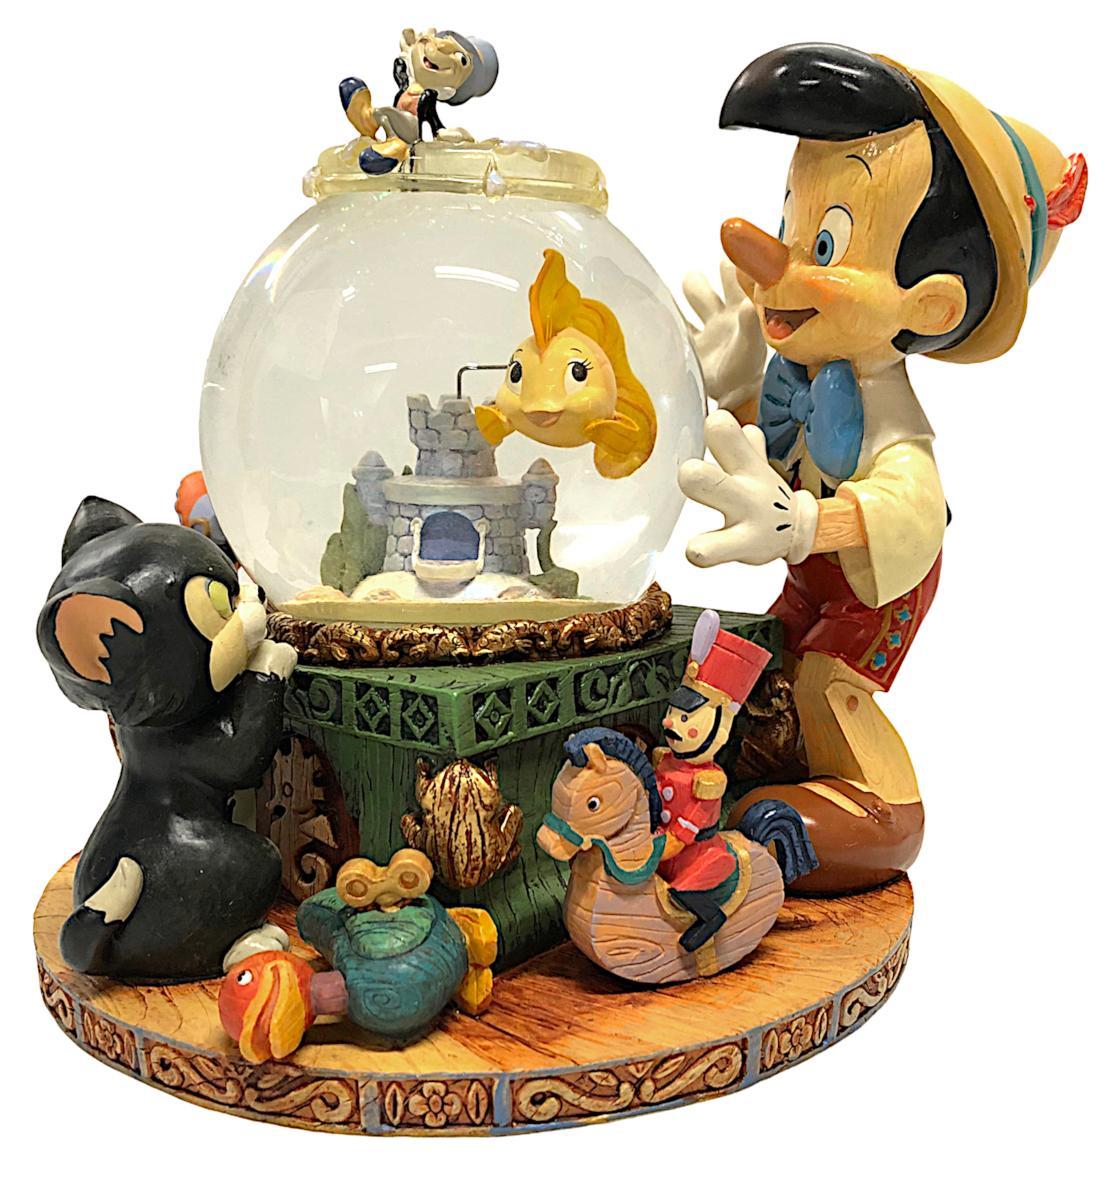 Primary image for Disney Snowglobe Pinocchio toyland fishbowl musical snow globe 384972